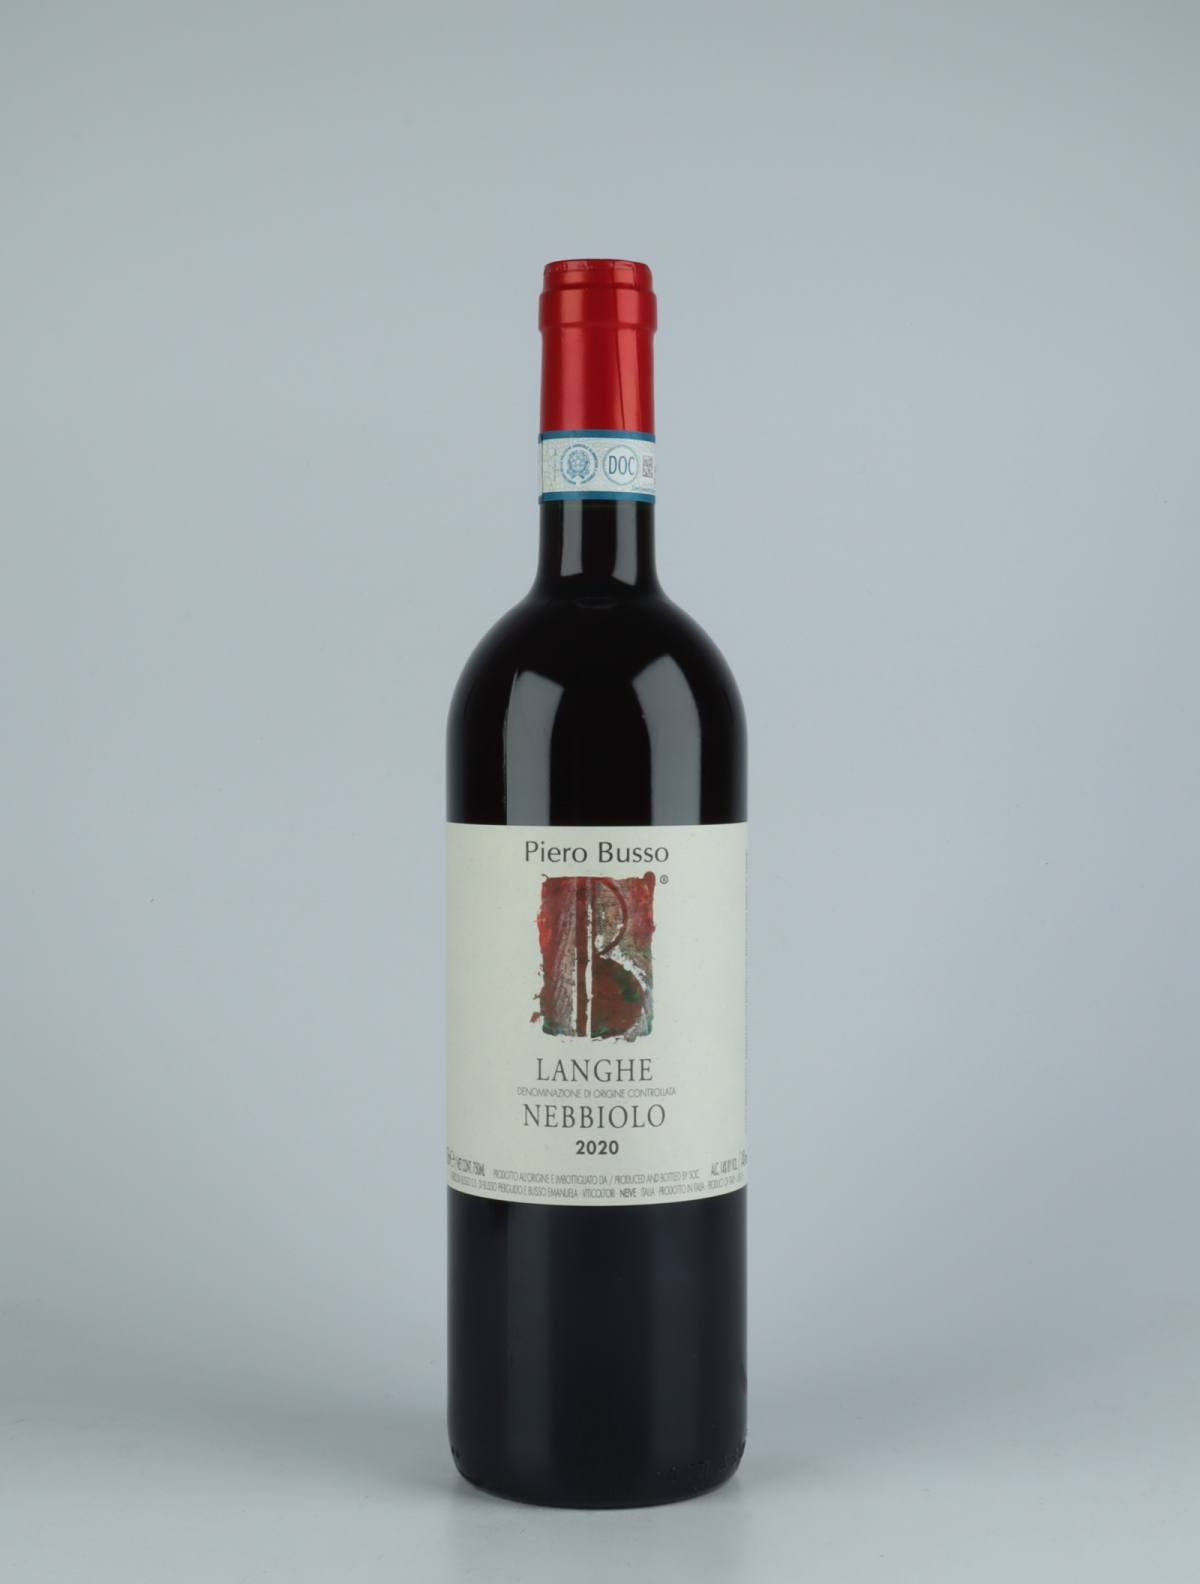 A bottle 2020 Langhe Nebbiolo Red wine from Piero Busso, Piedmont in Italy